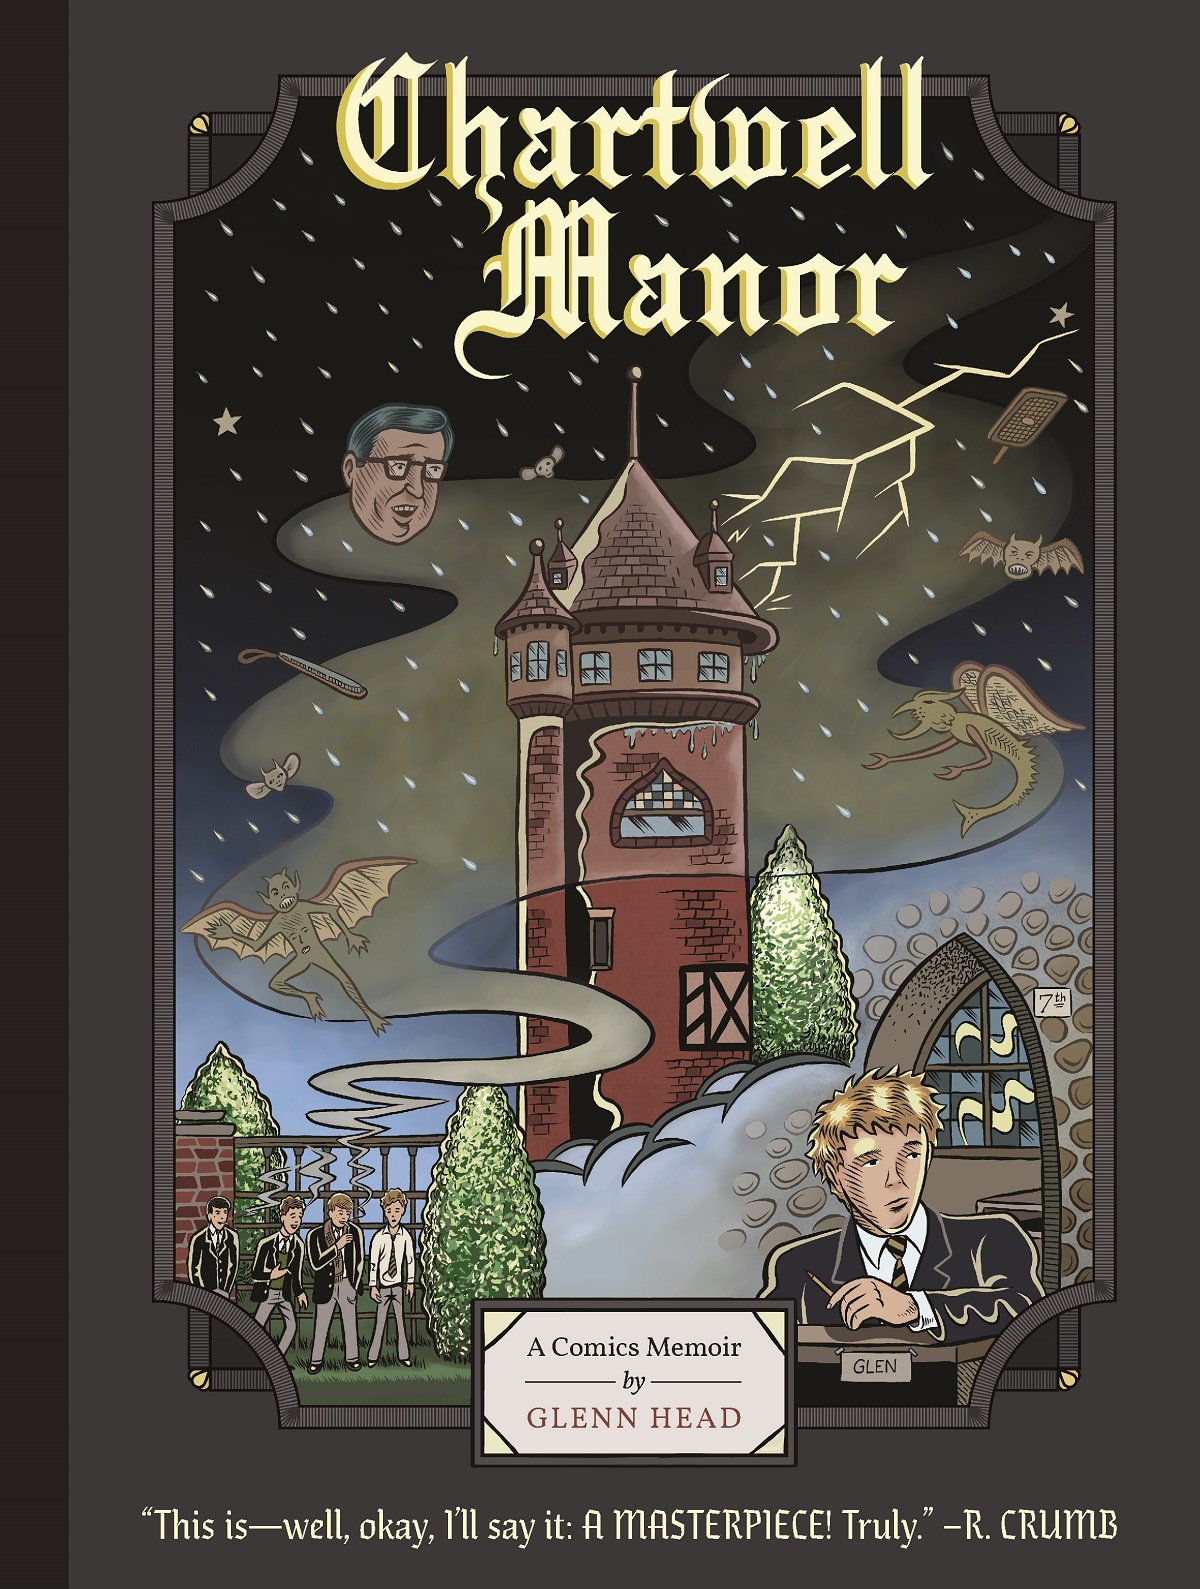 chartwell manor comic book